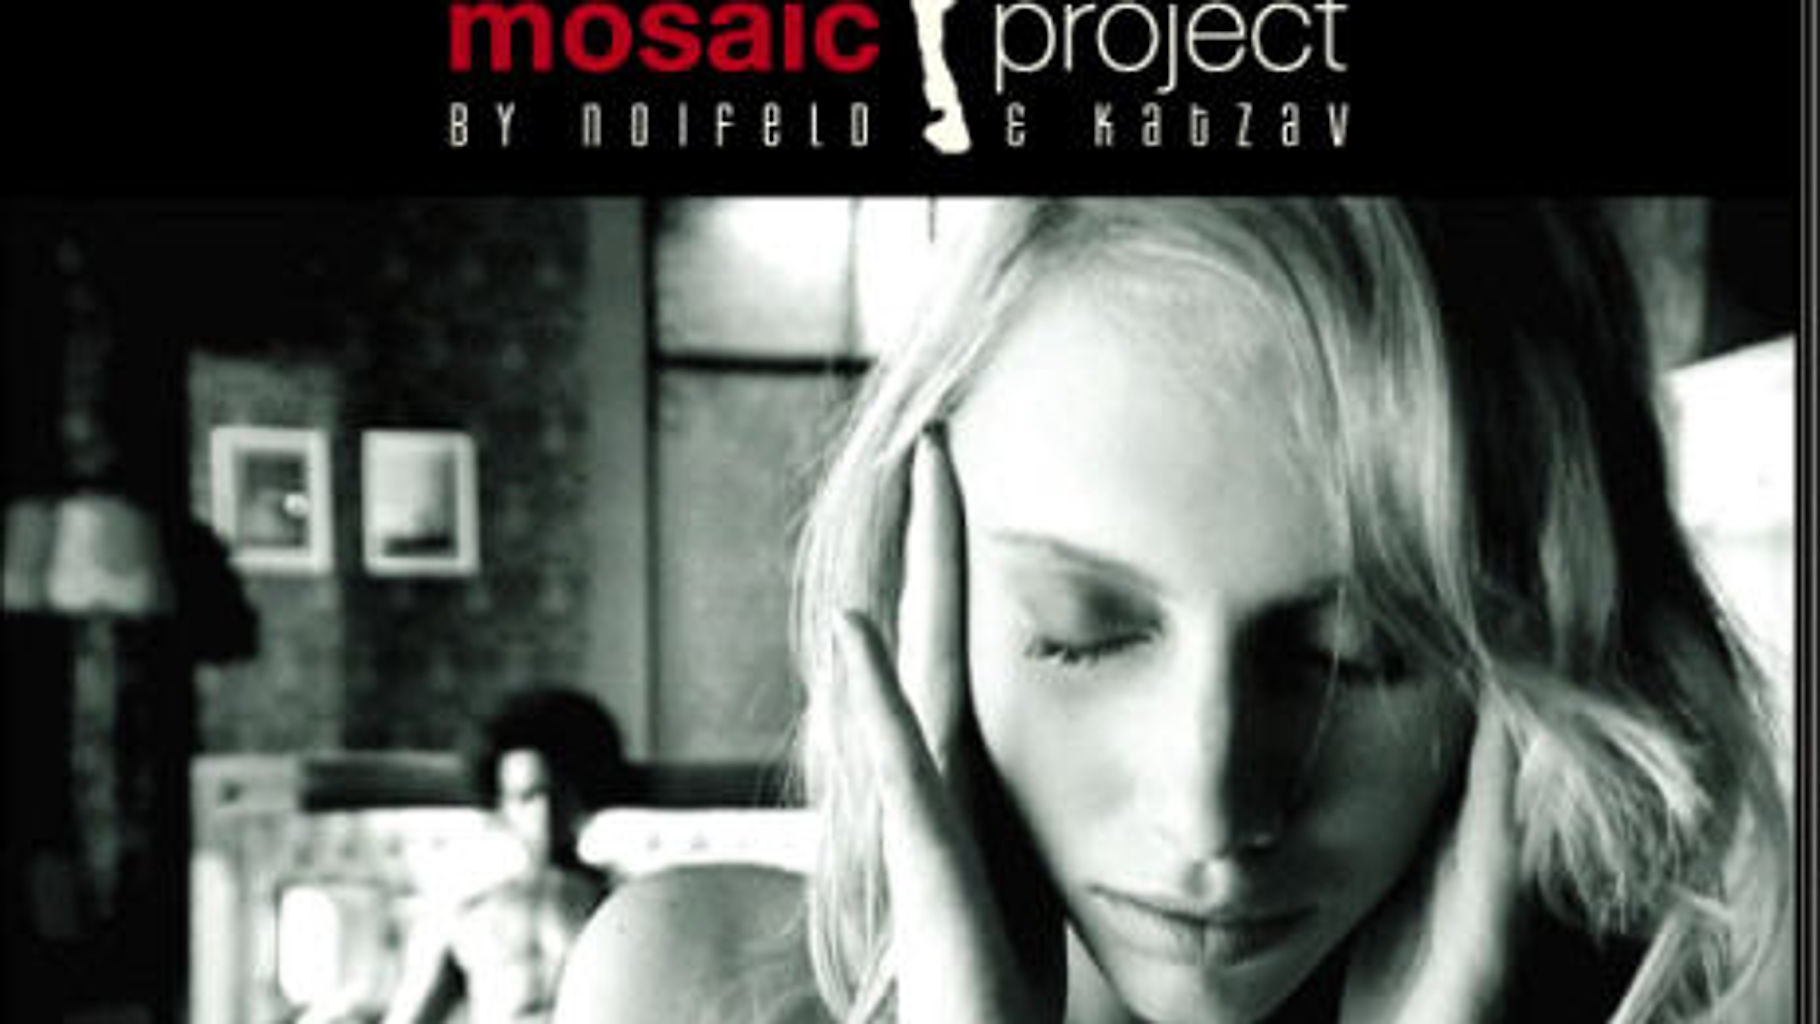 Mosaic Project